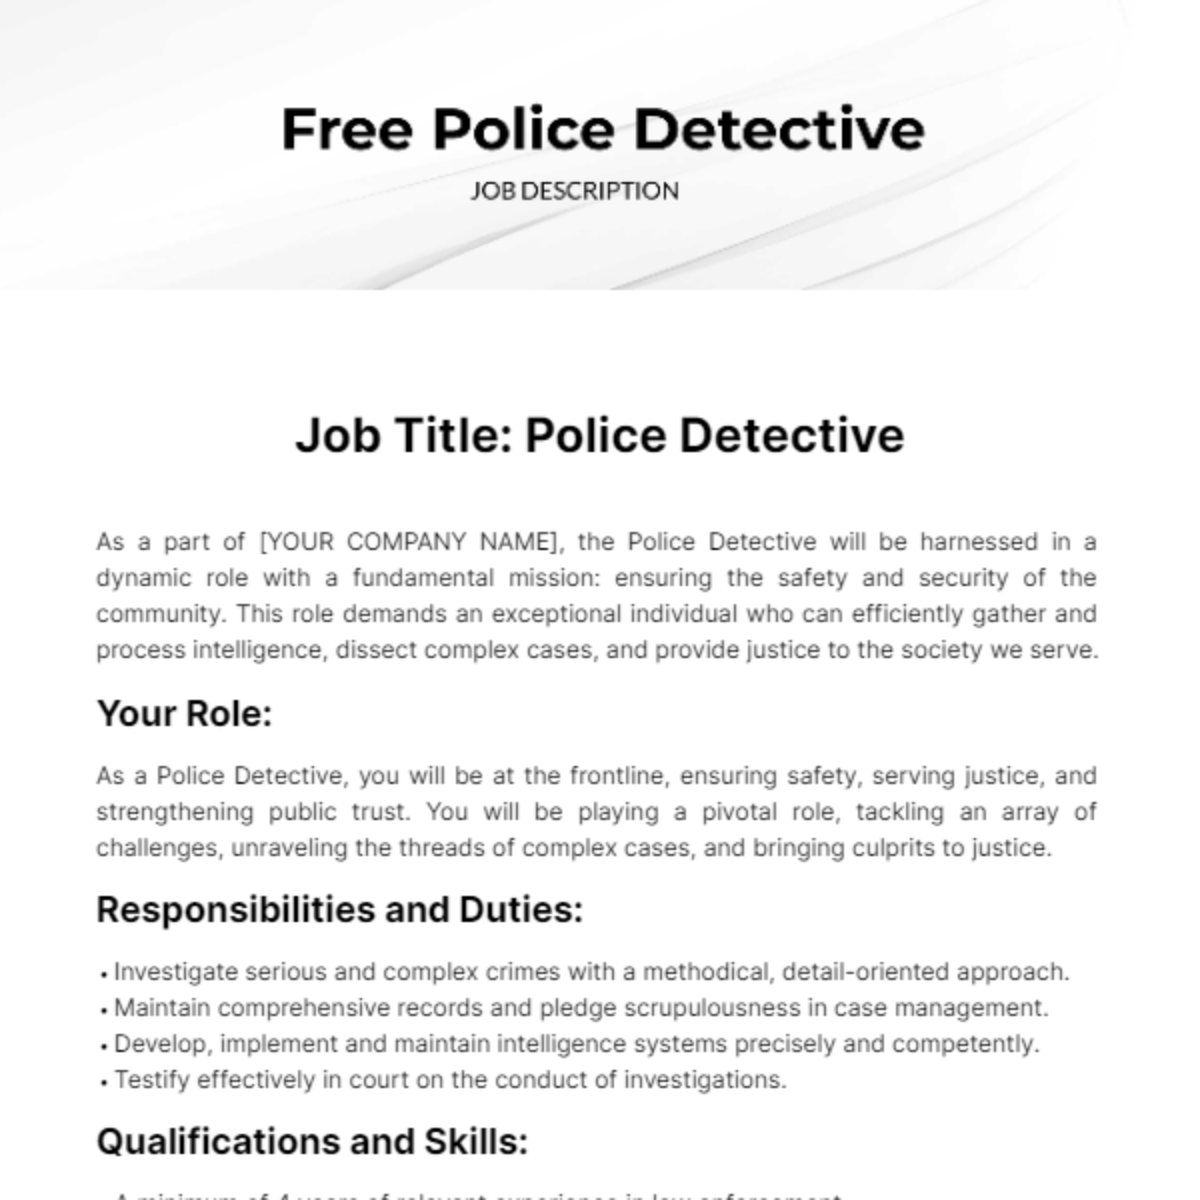 Free Police Detective Job Description Template